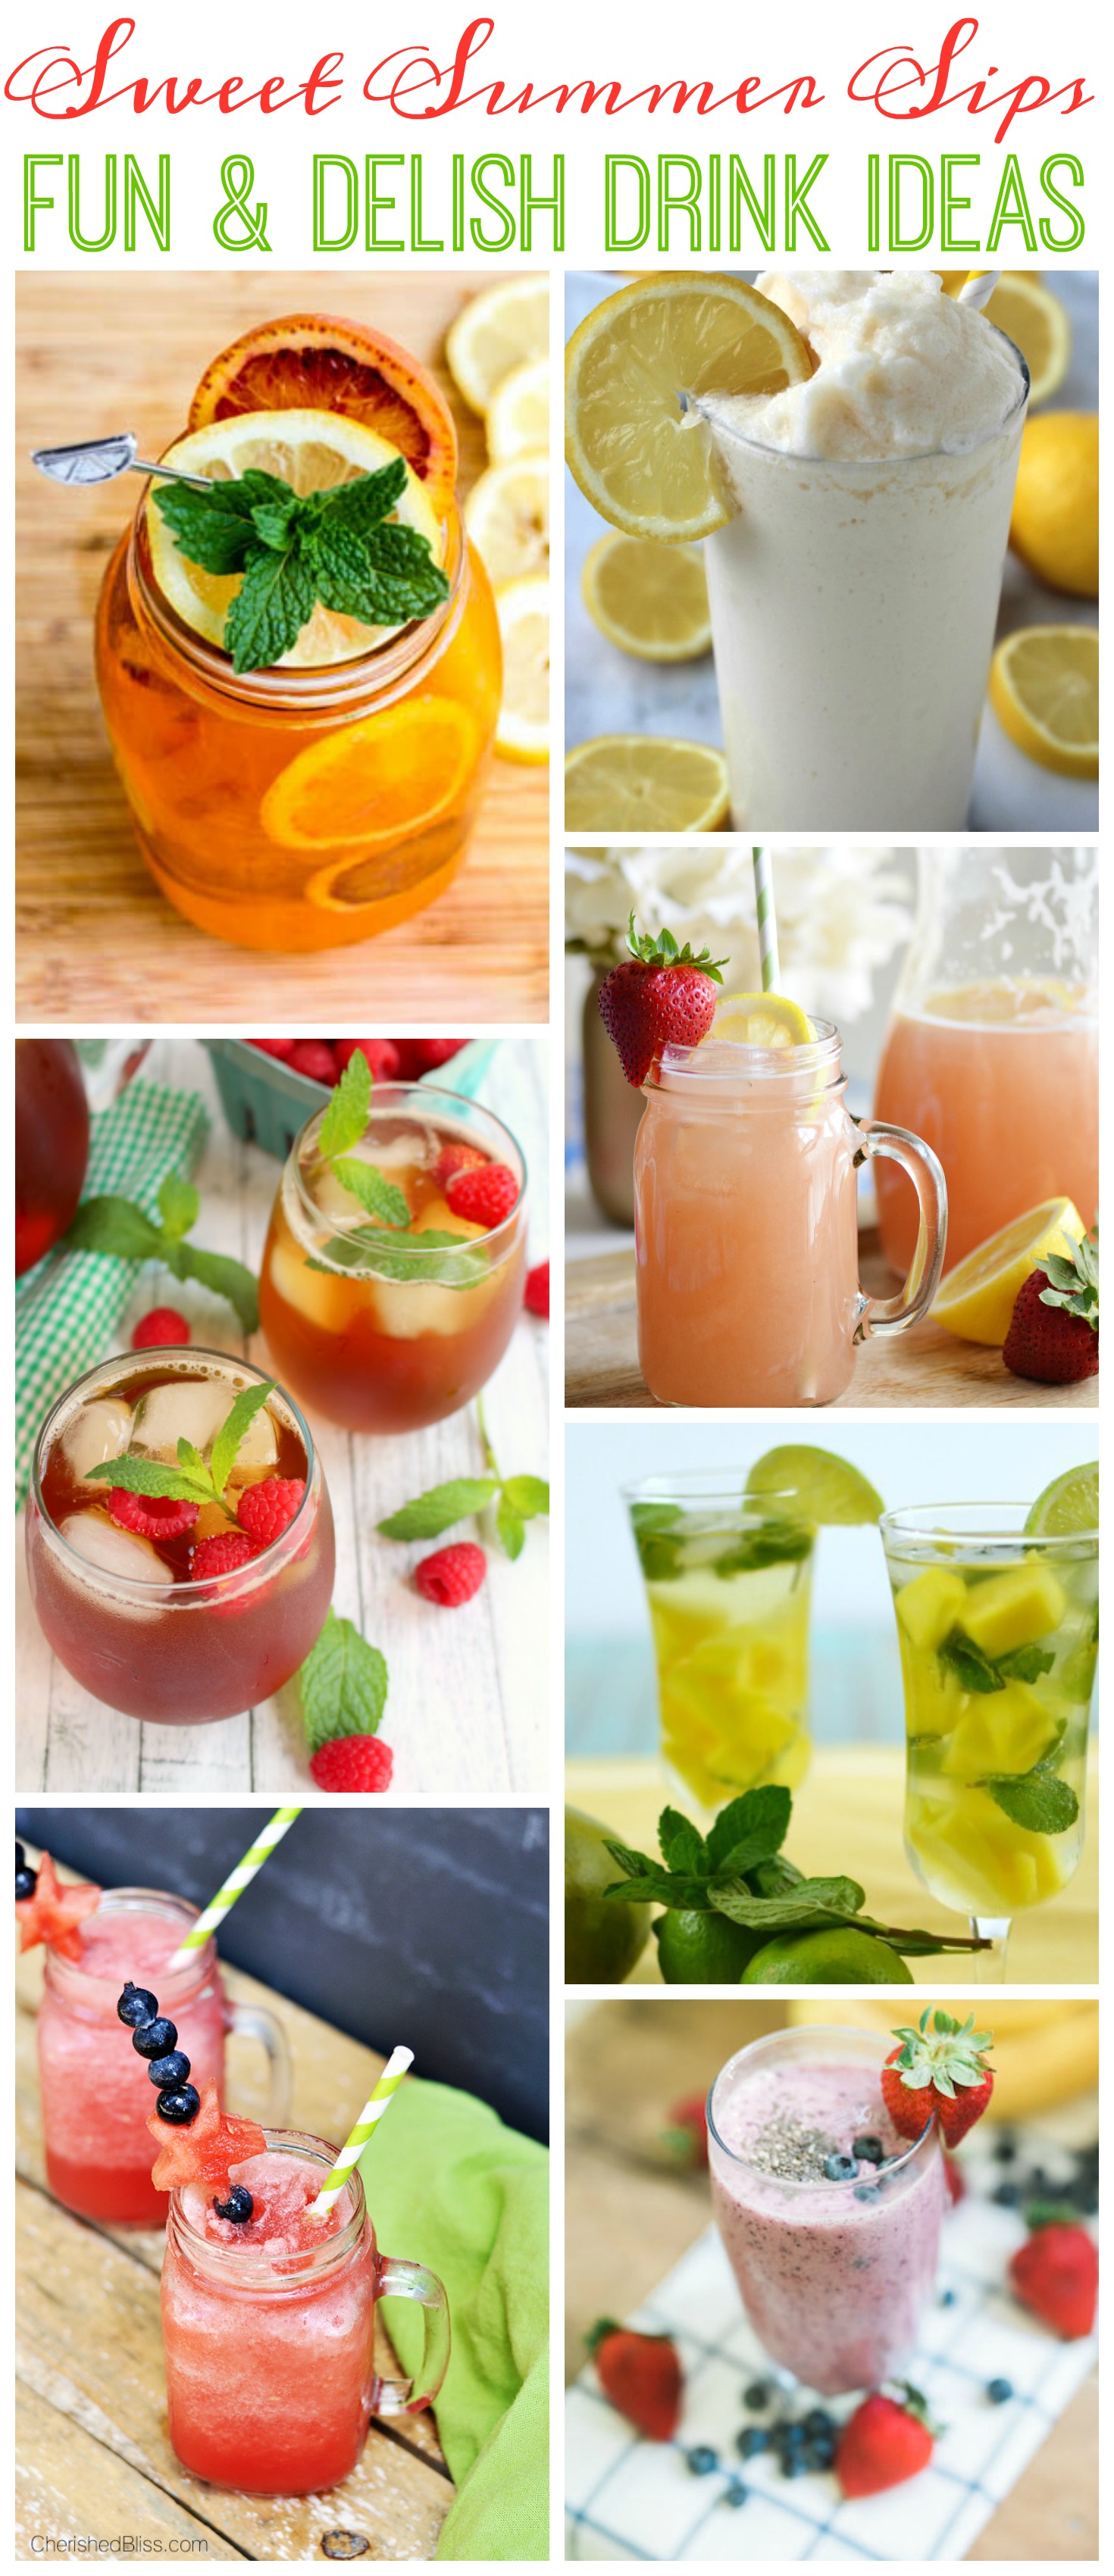 Fun & Delicious summer drink ideas poster.